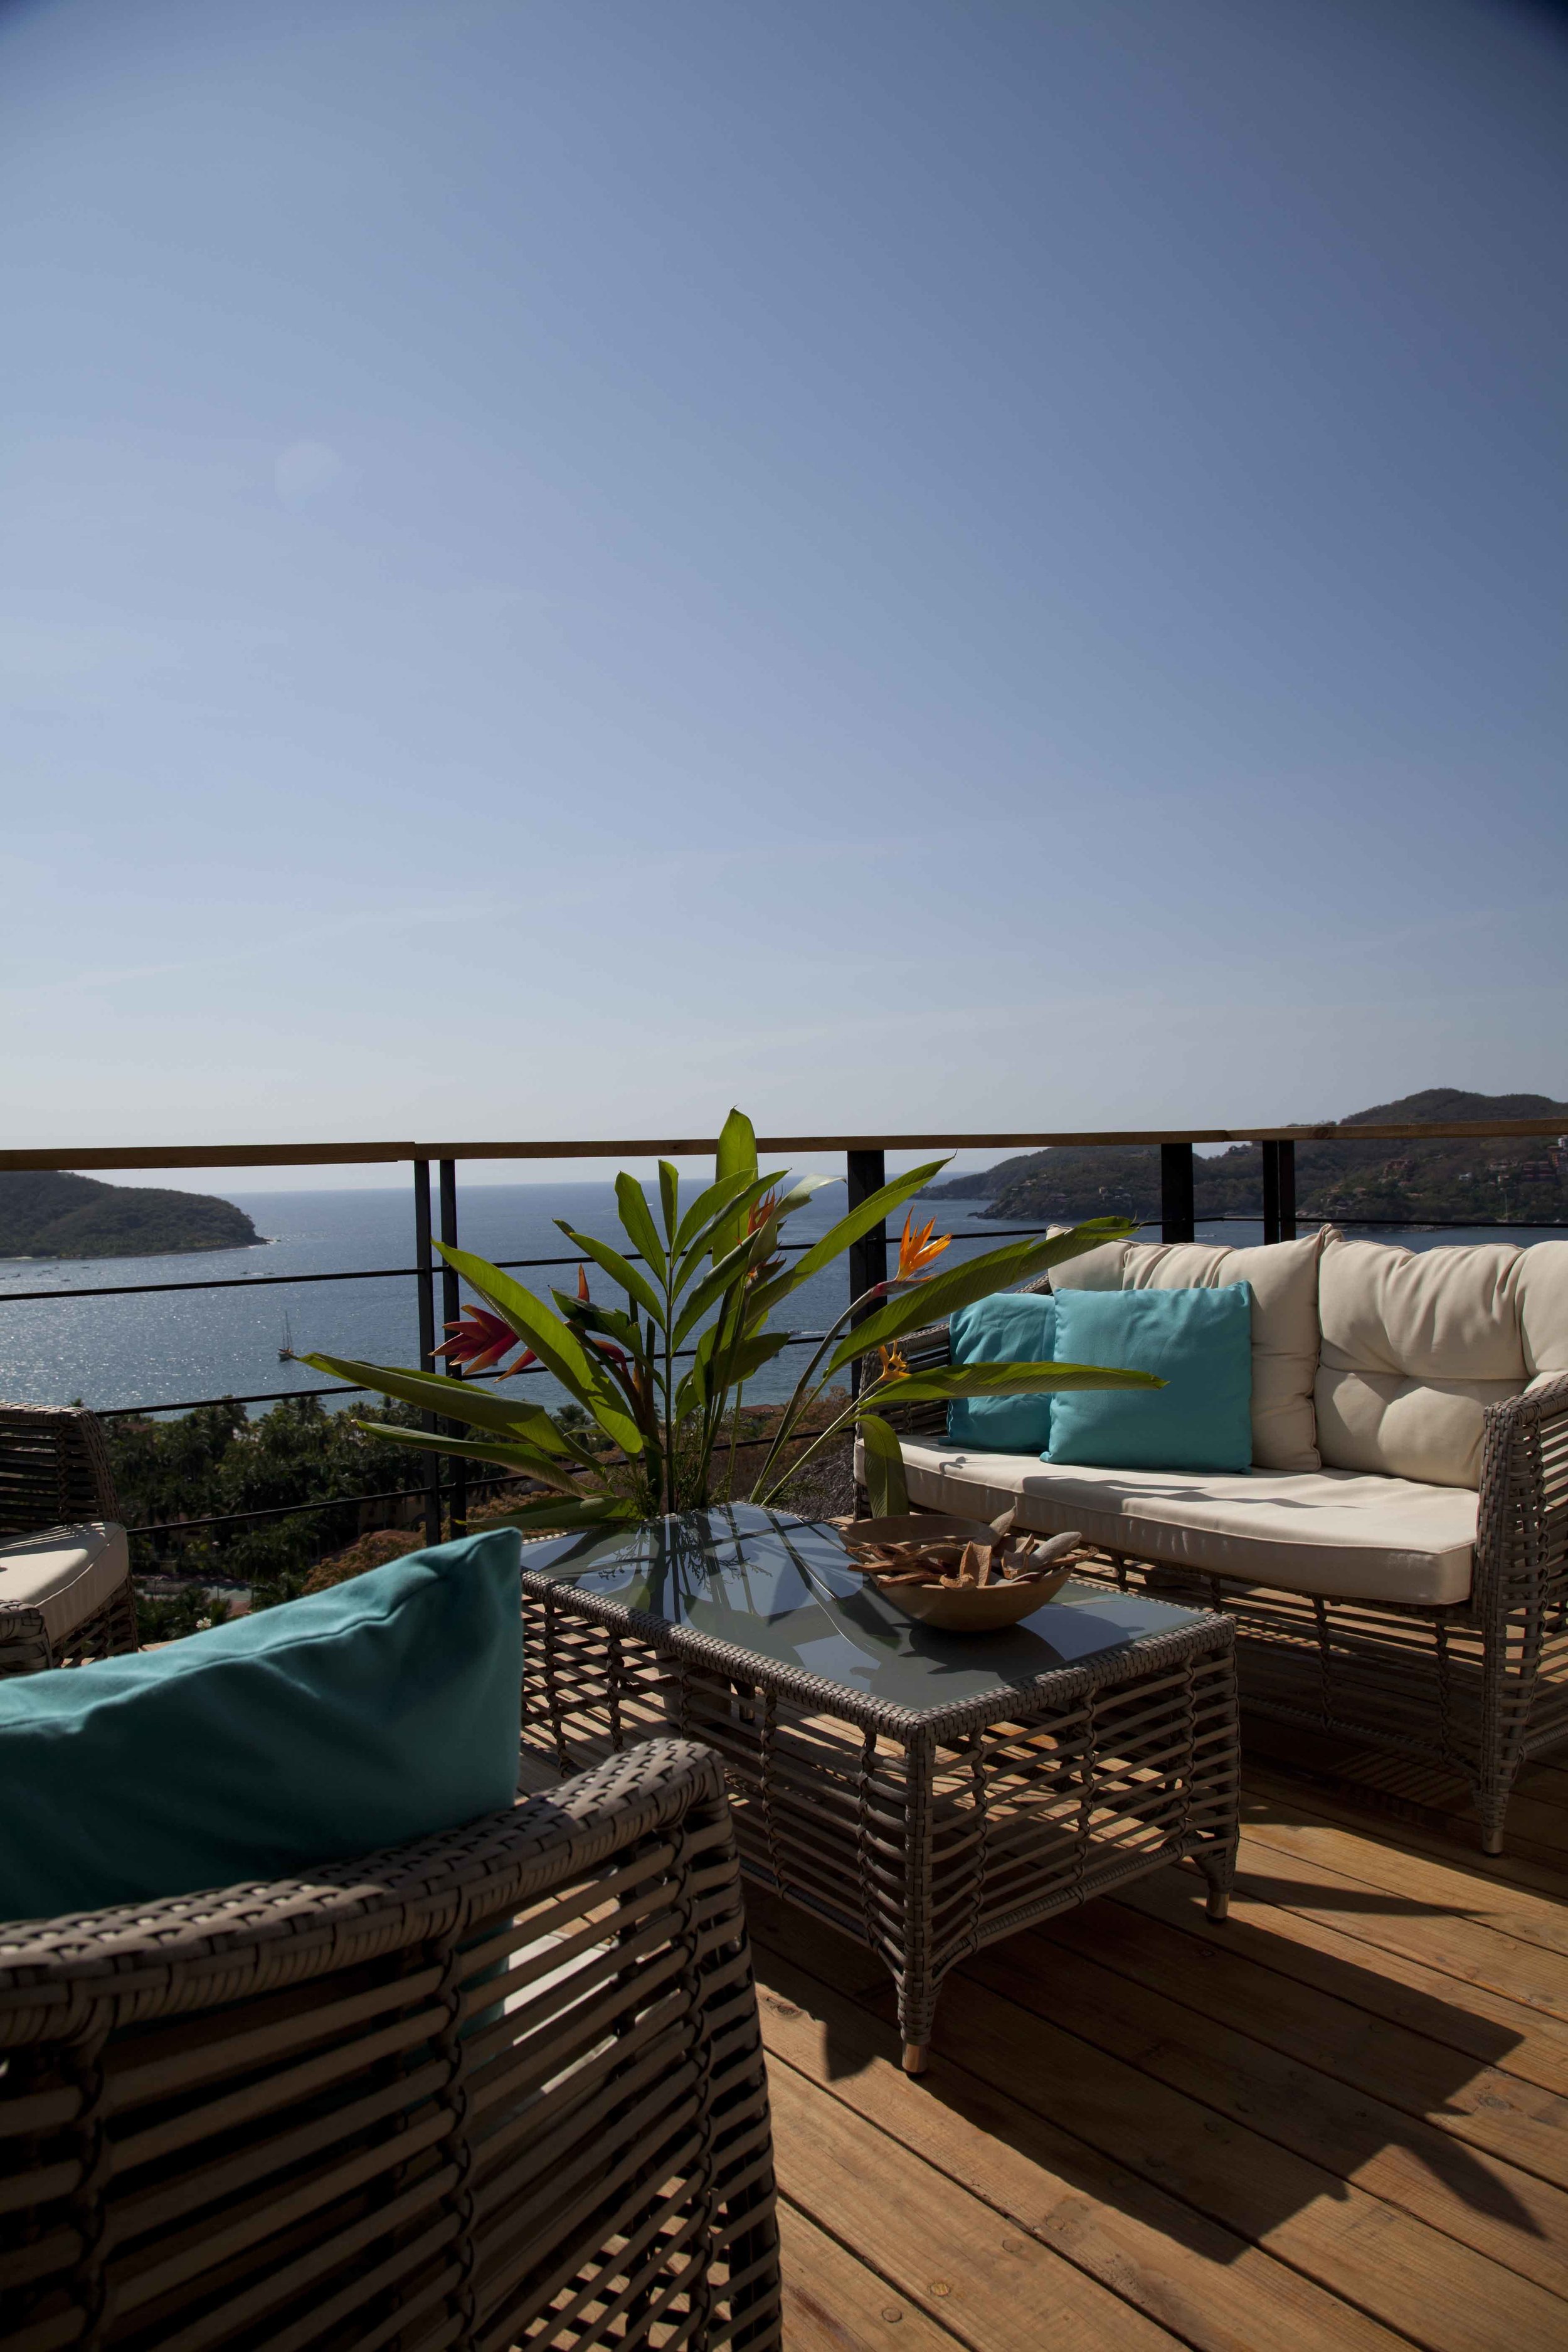 Ensueño-zihuatanejo-ixtapa-mexico-property-home-listings-for-sale-rent-ocean-view-terrace.JPG